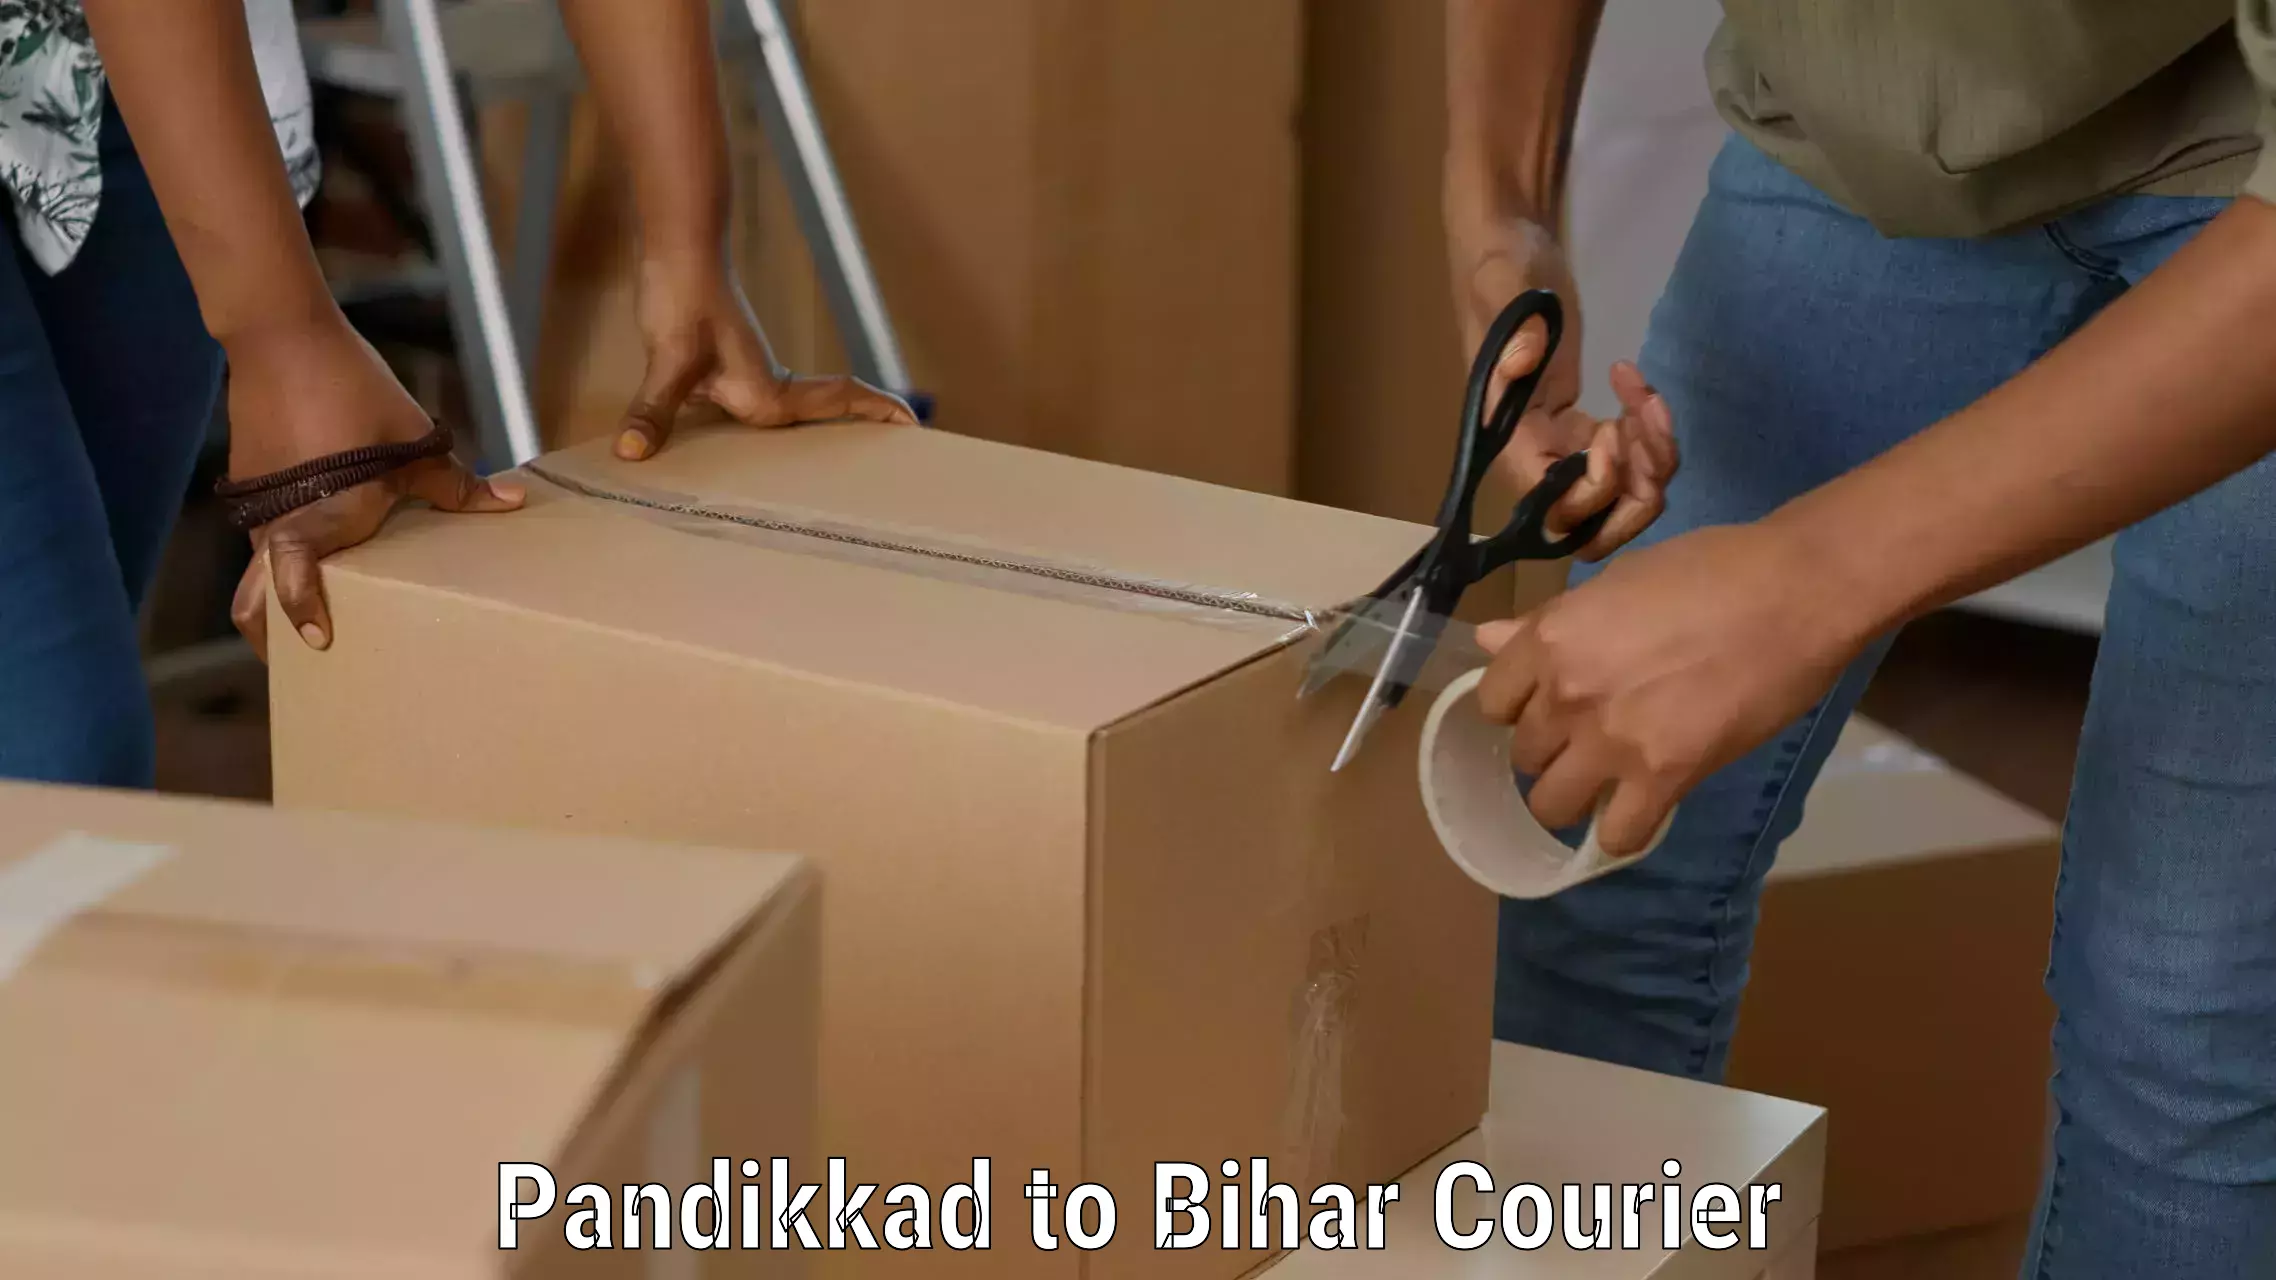 Bulk shipping discounts Pandikkad to Bihar